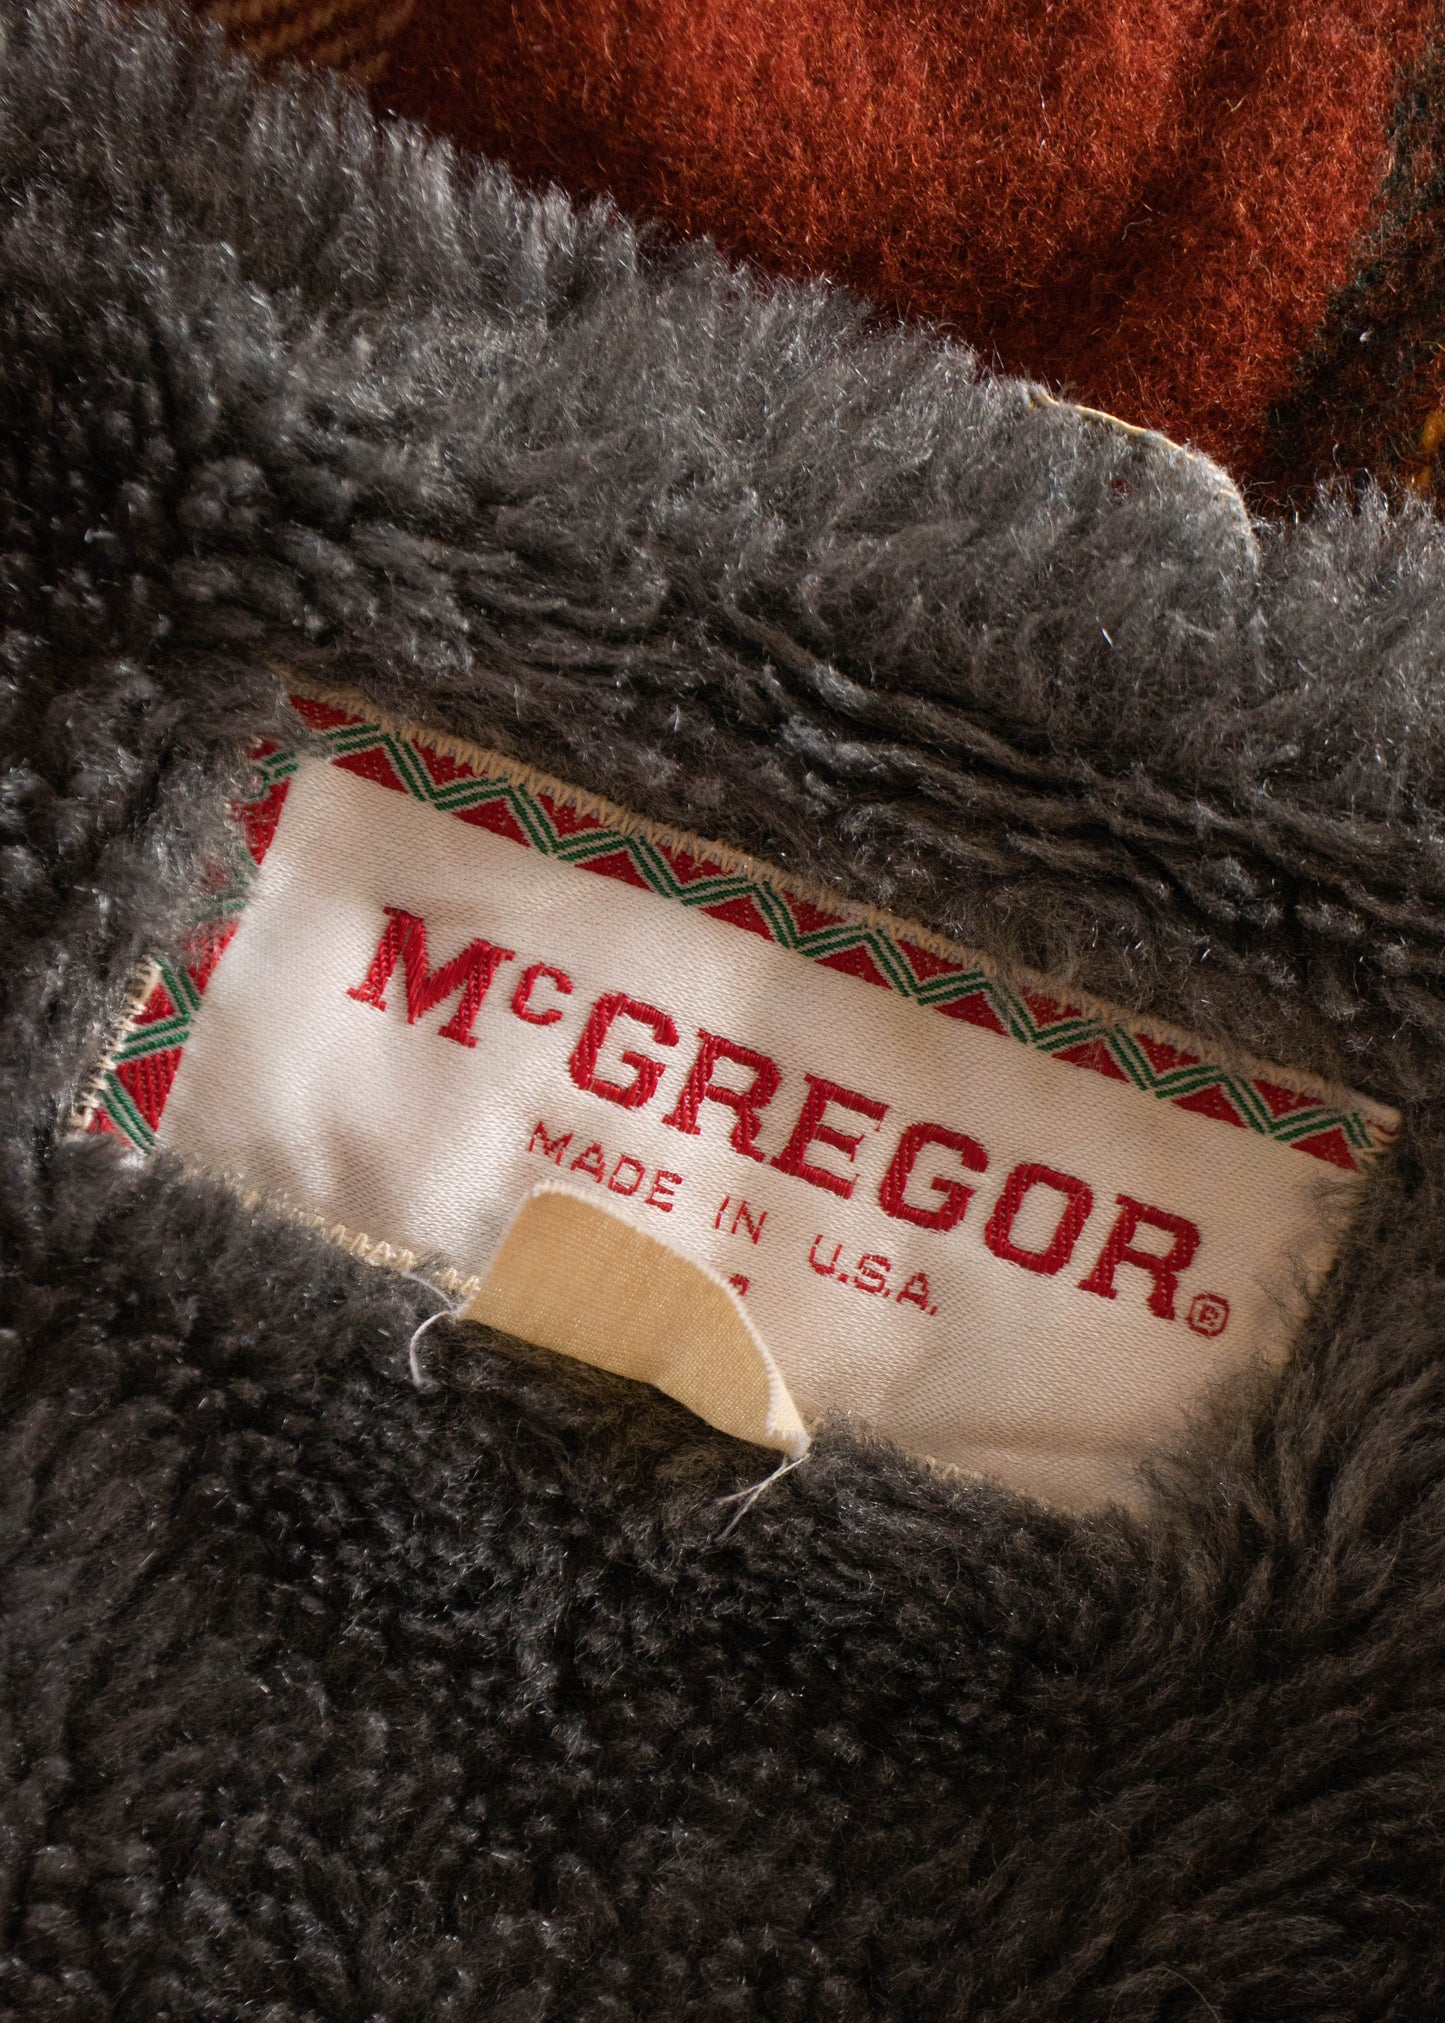 1970s McGregor Wool Flannel Jacket Size L/XL